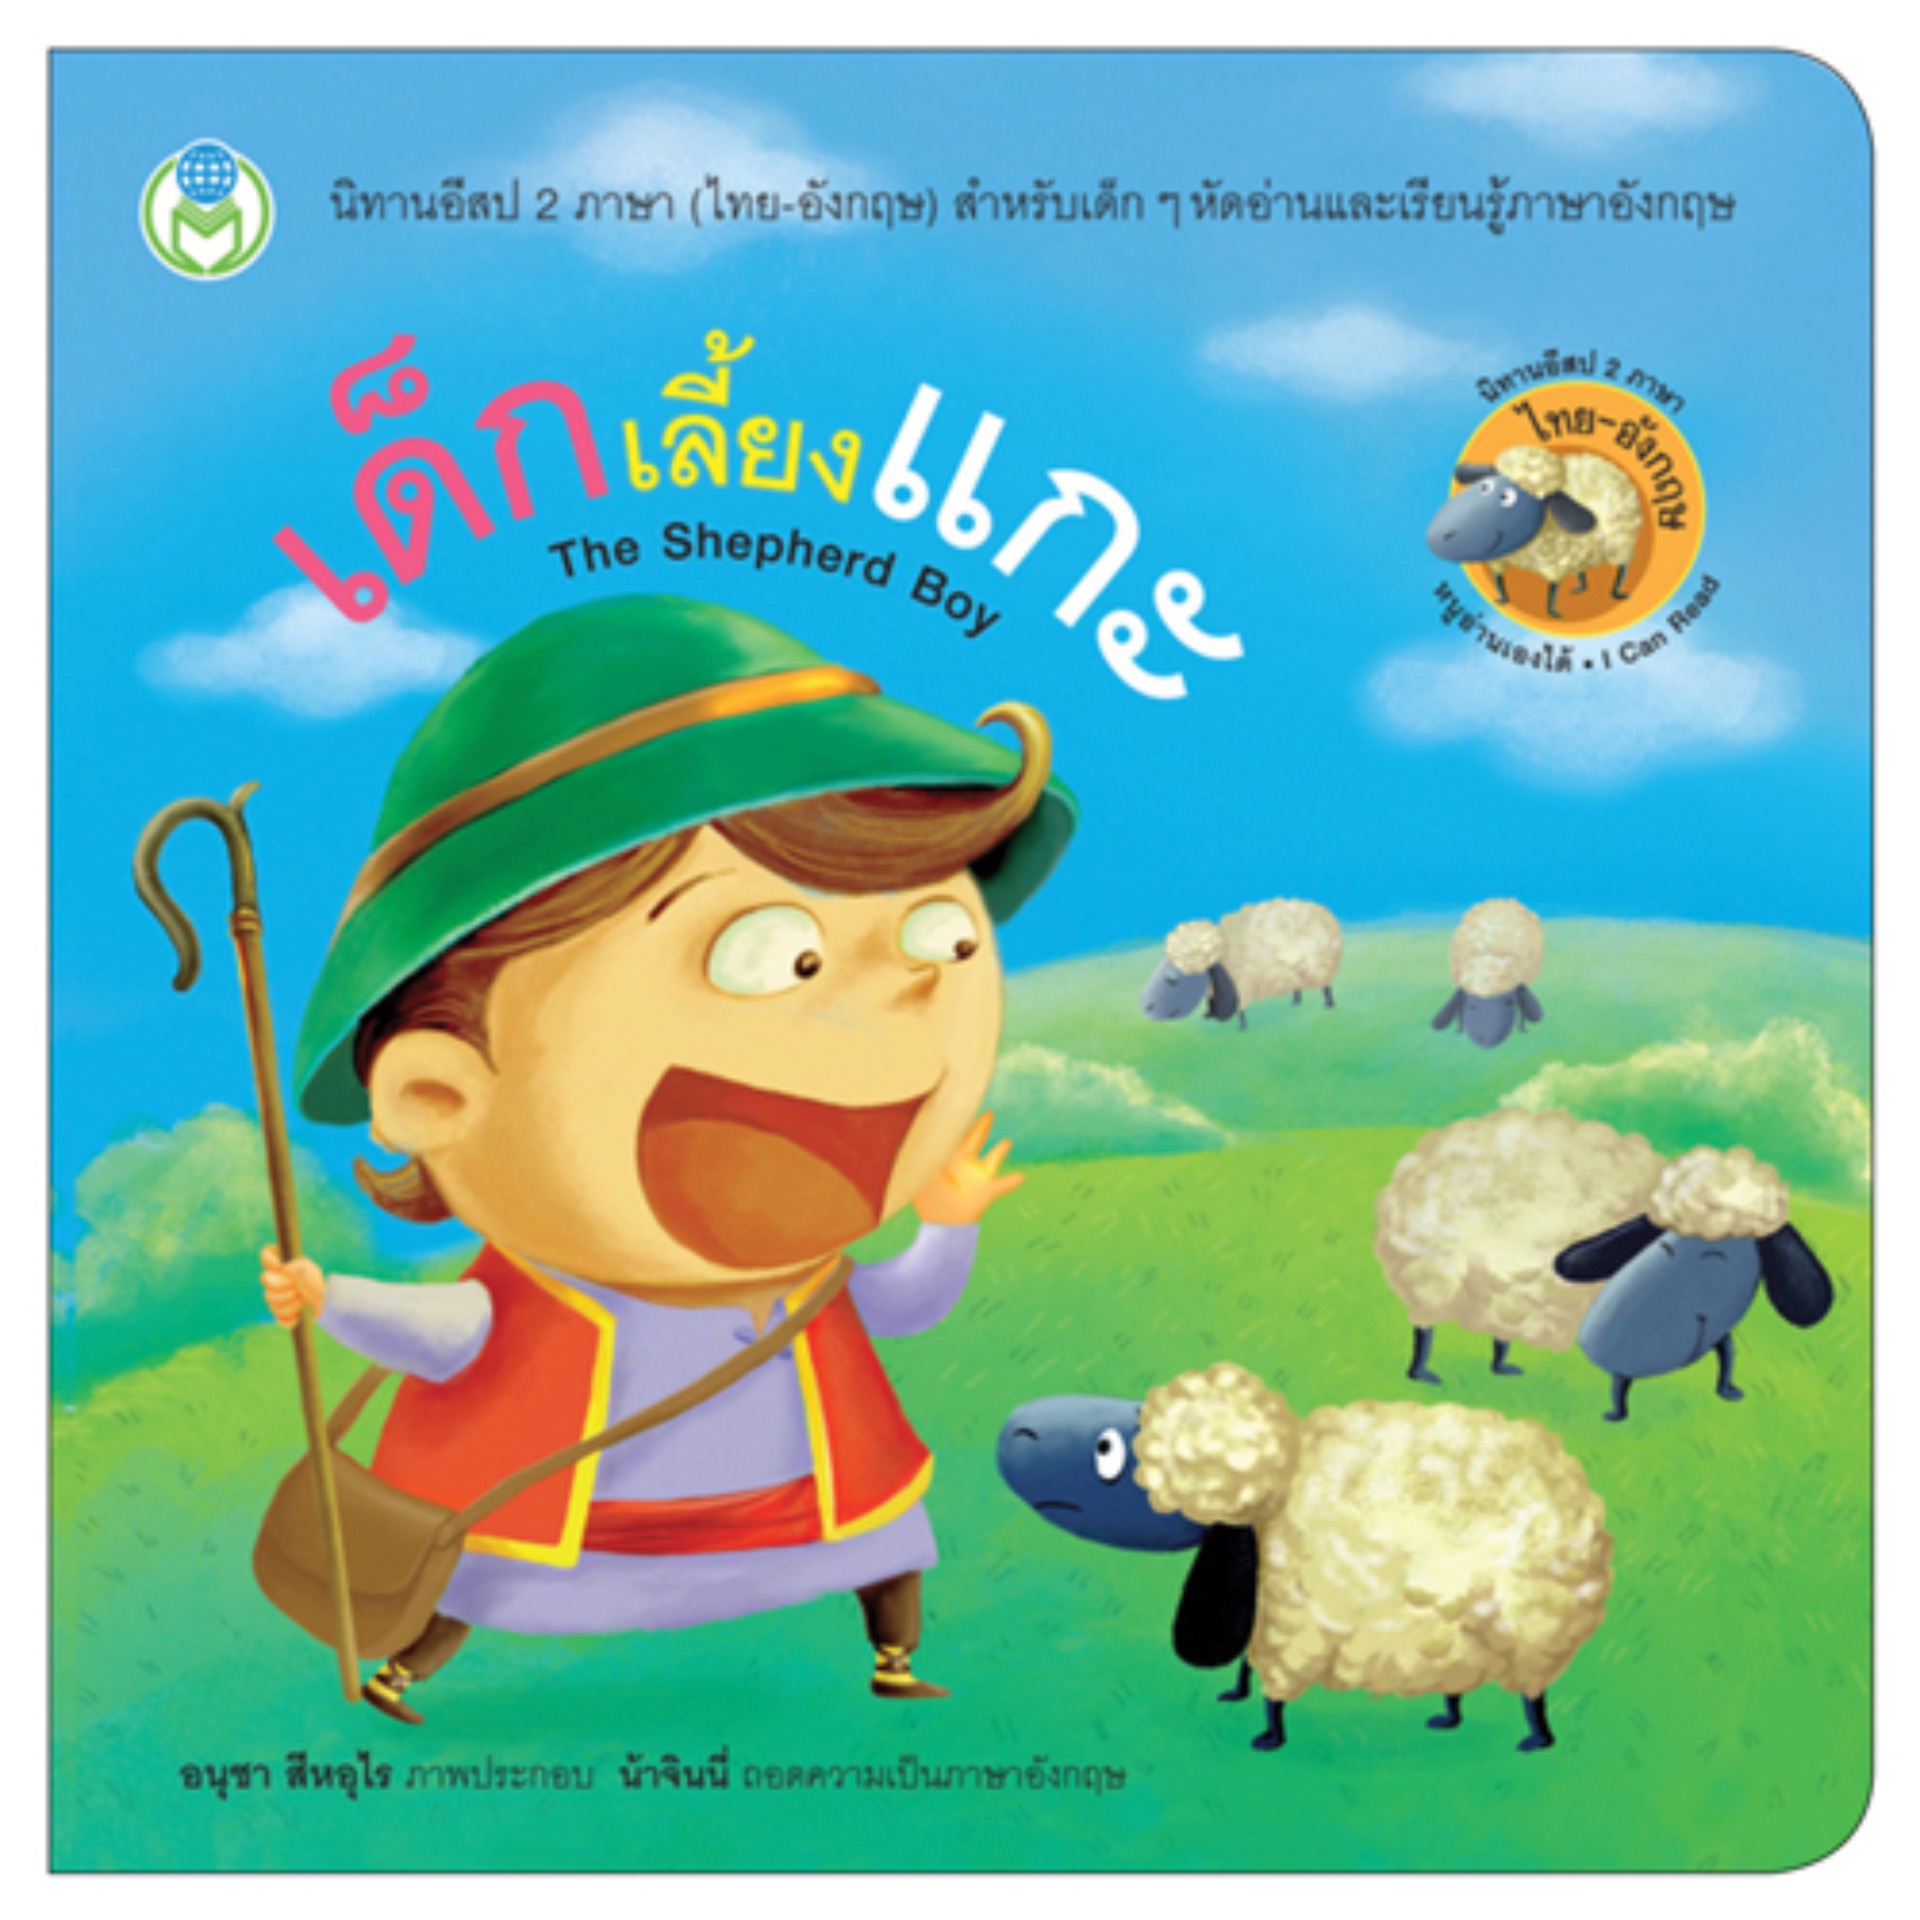 Book World หนังสือนิทานอีสป 2 ภาษา (ไทย-อังกฤษ) เด็กเลี้ยงแกะ (The Shepherd Boy)